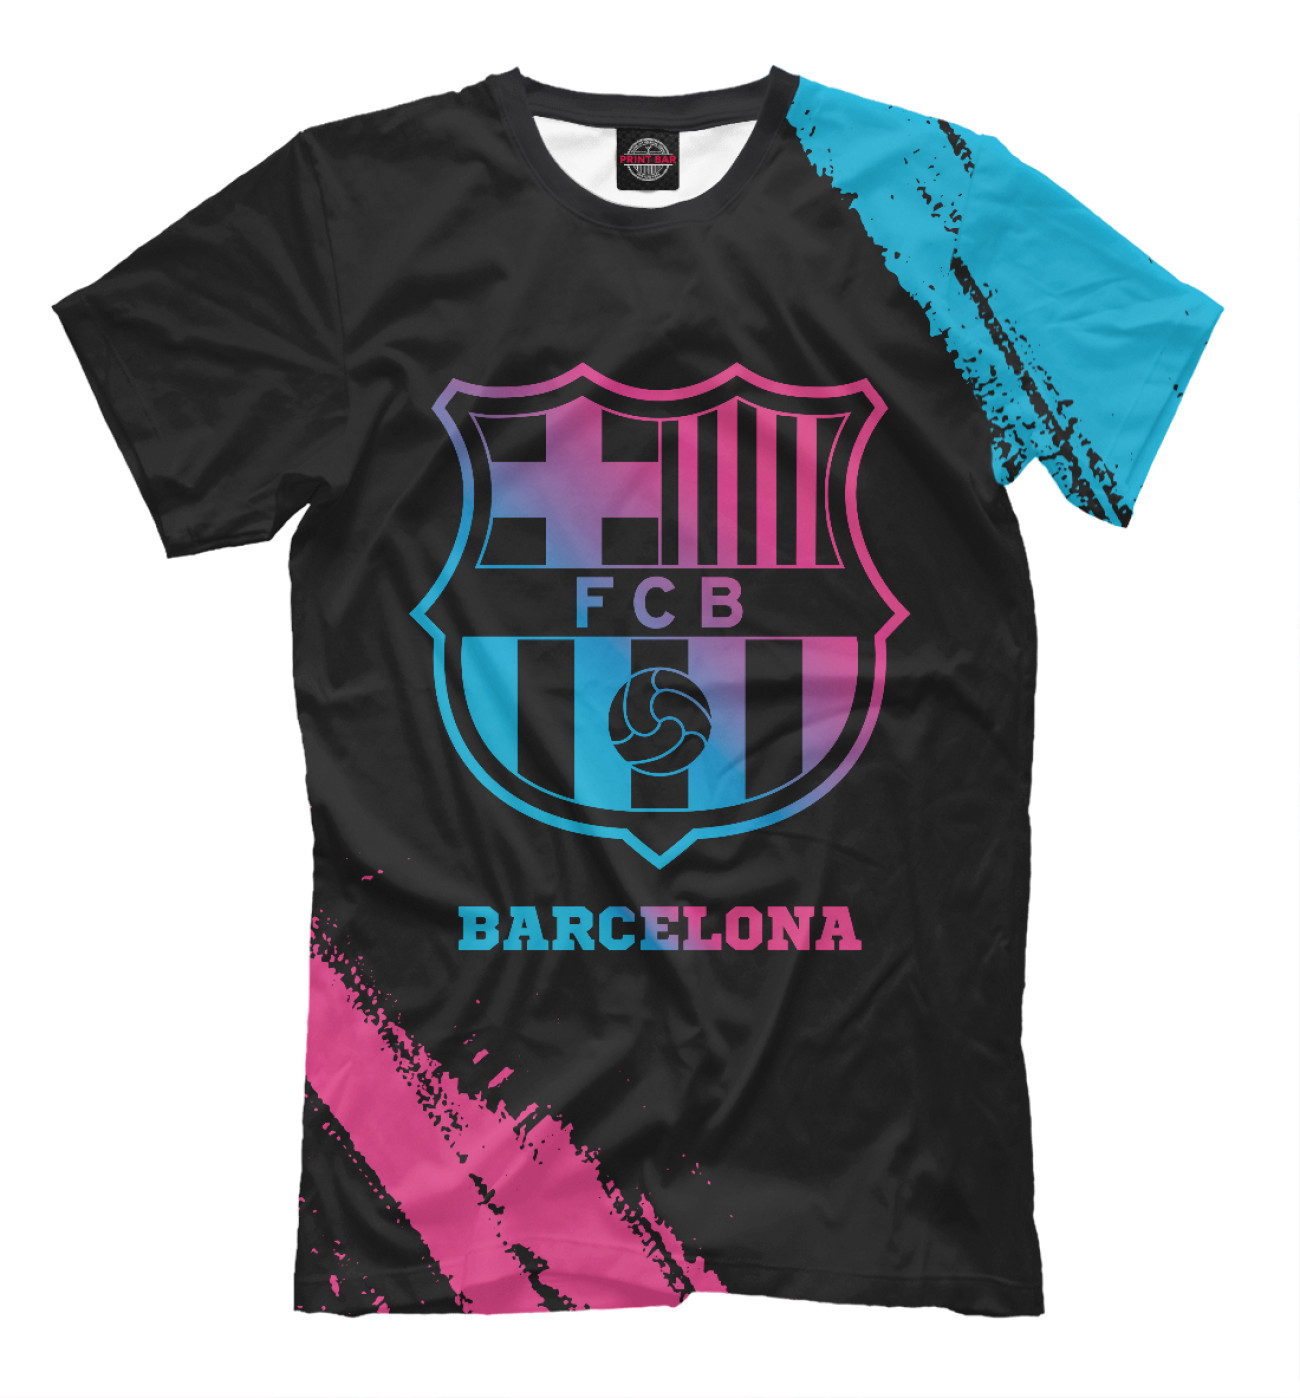 Мужская Футболка Barcelona Neon Gradient, артикул: BAR-831896-fut-2